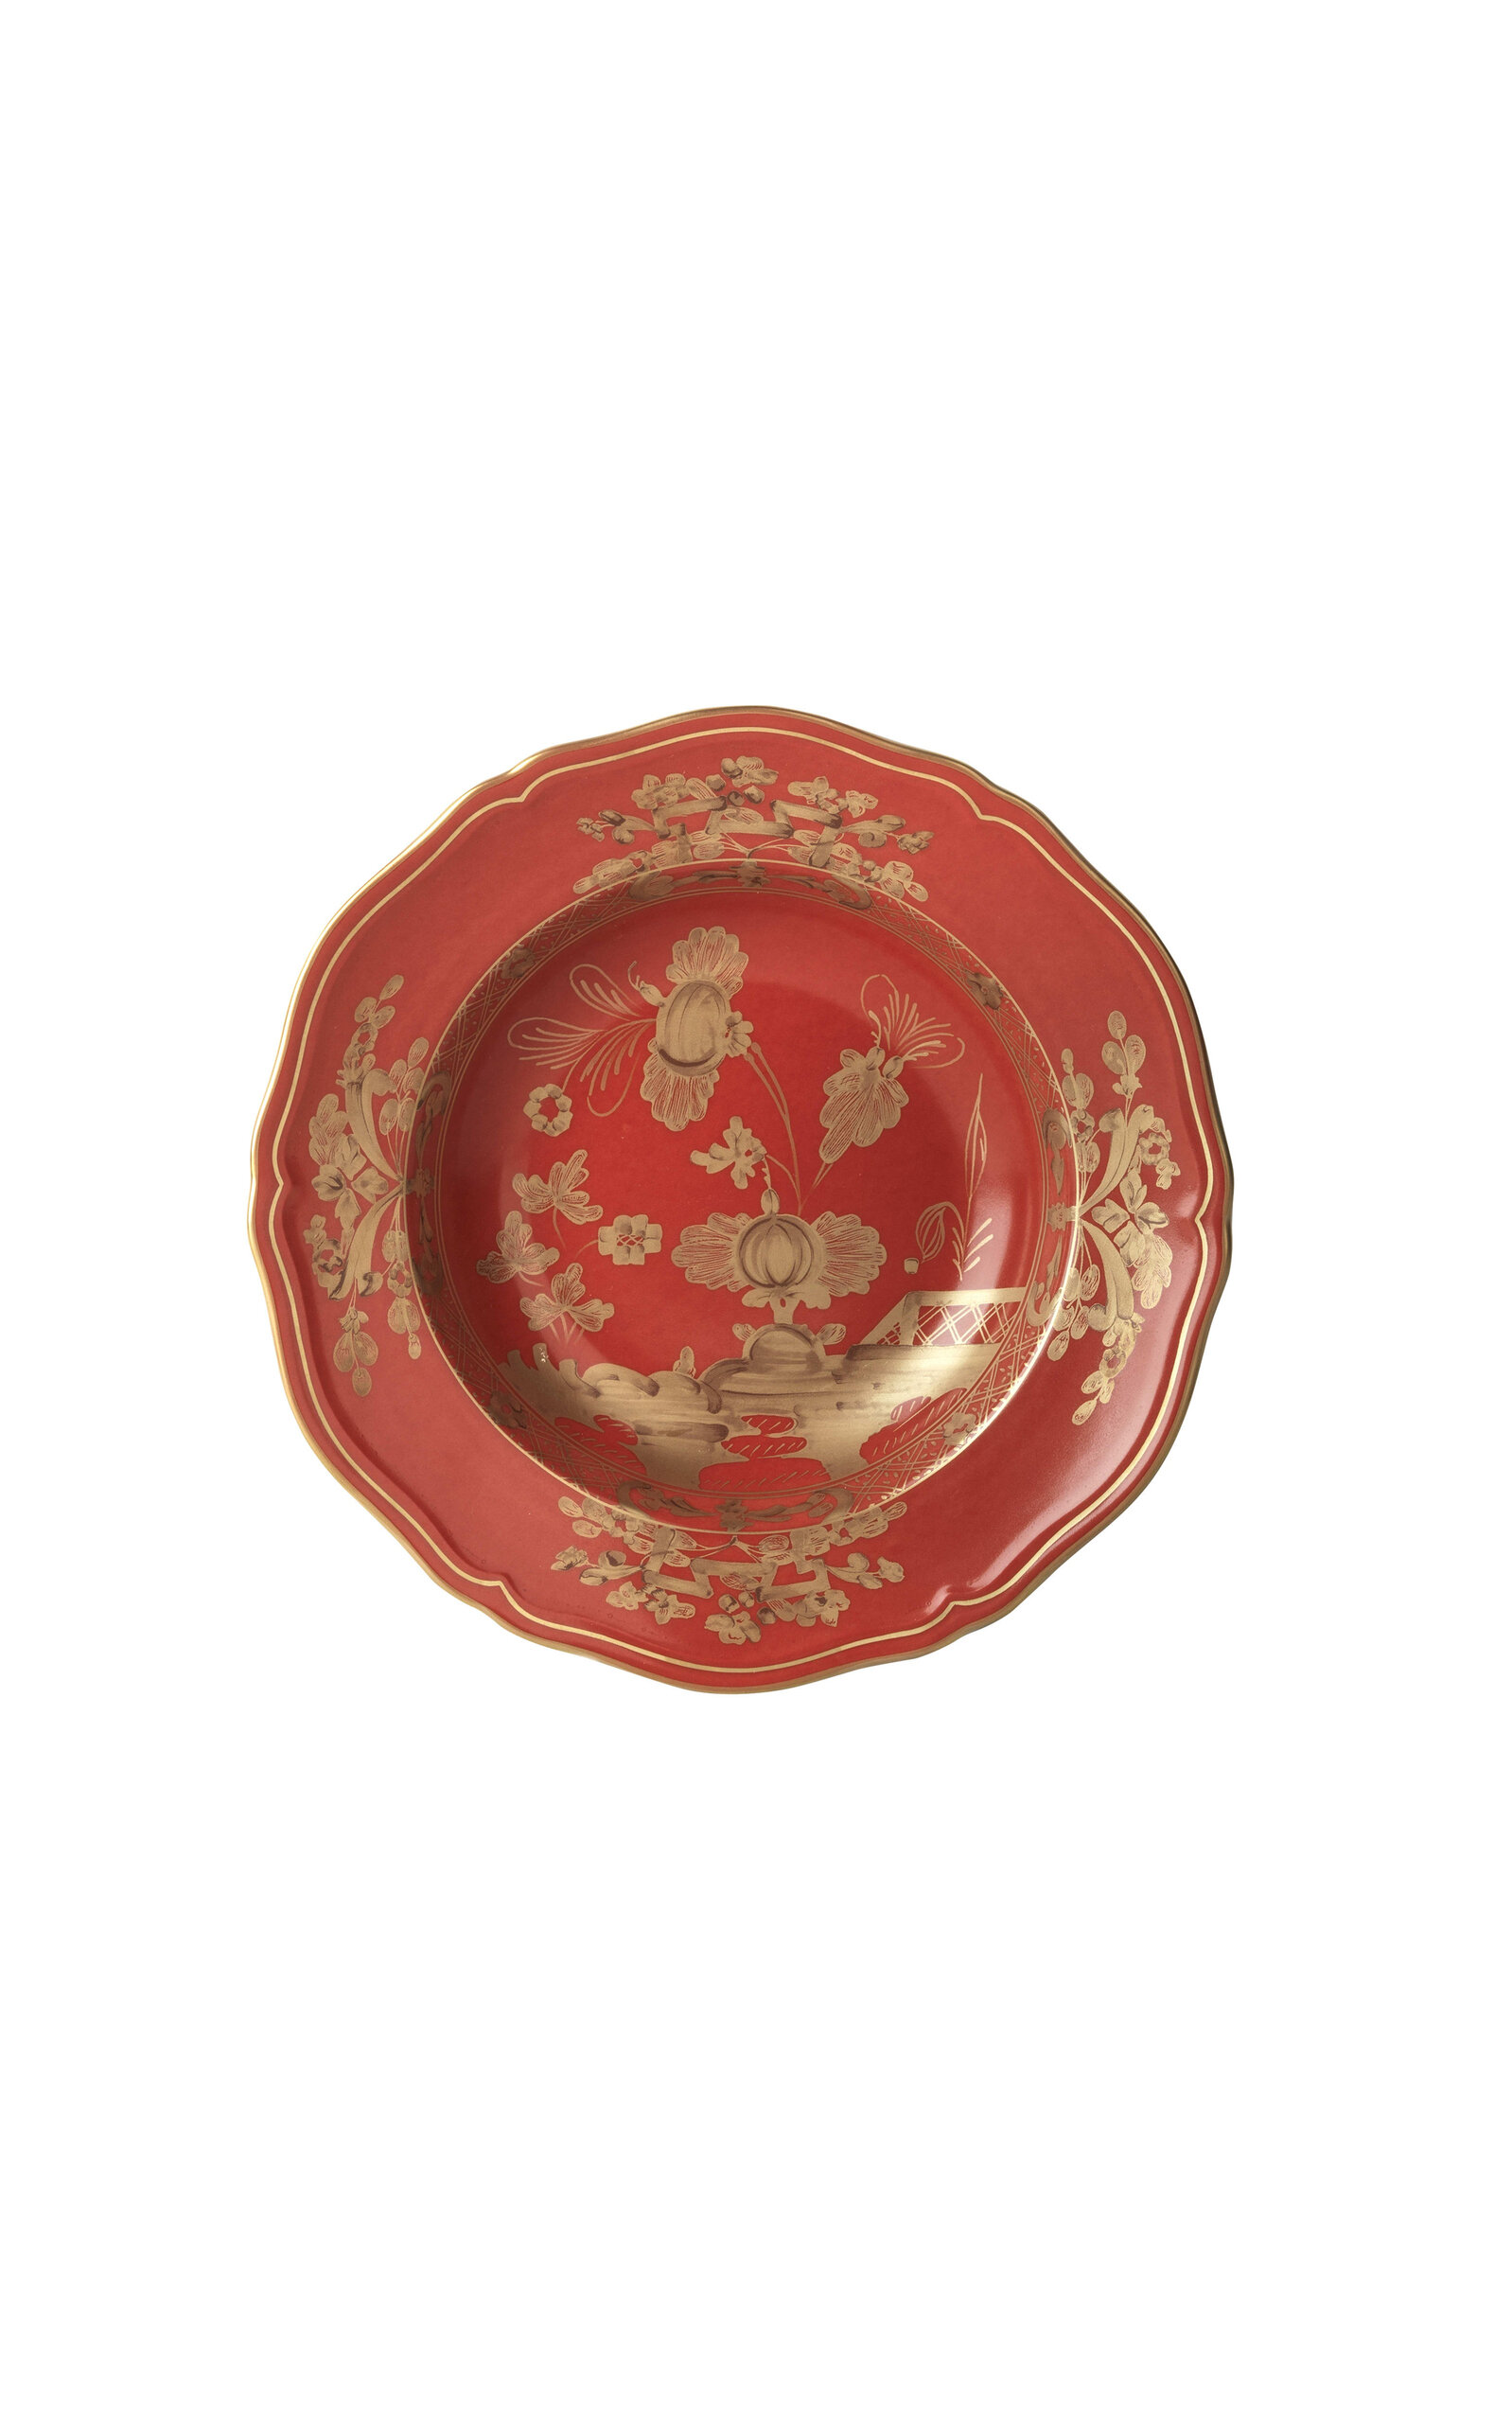 Ginori 1735 Antico Doccia Porcelain Soup Plate In Red